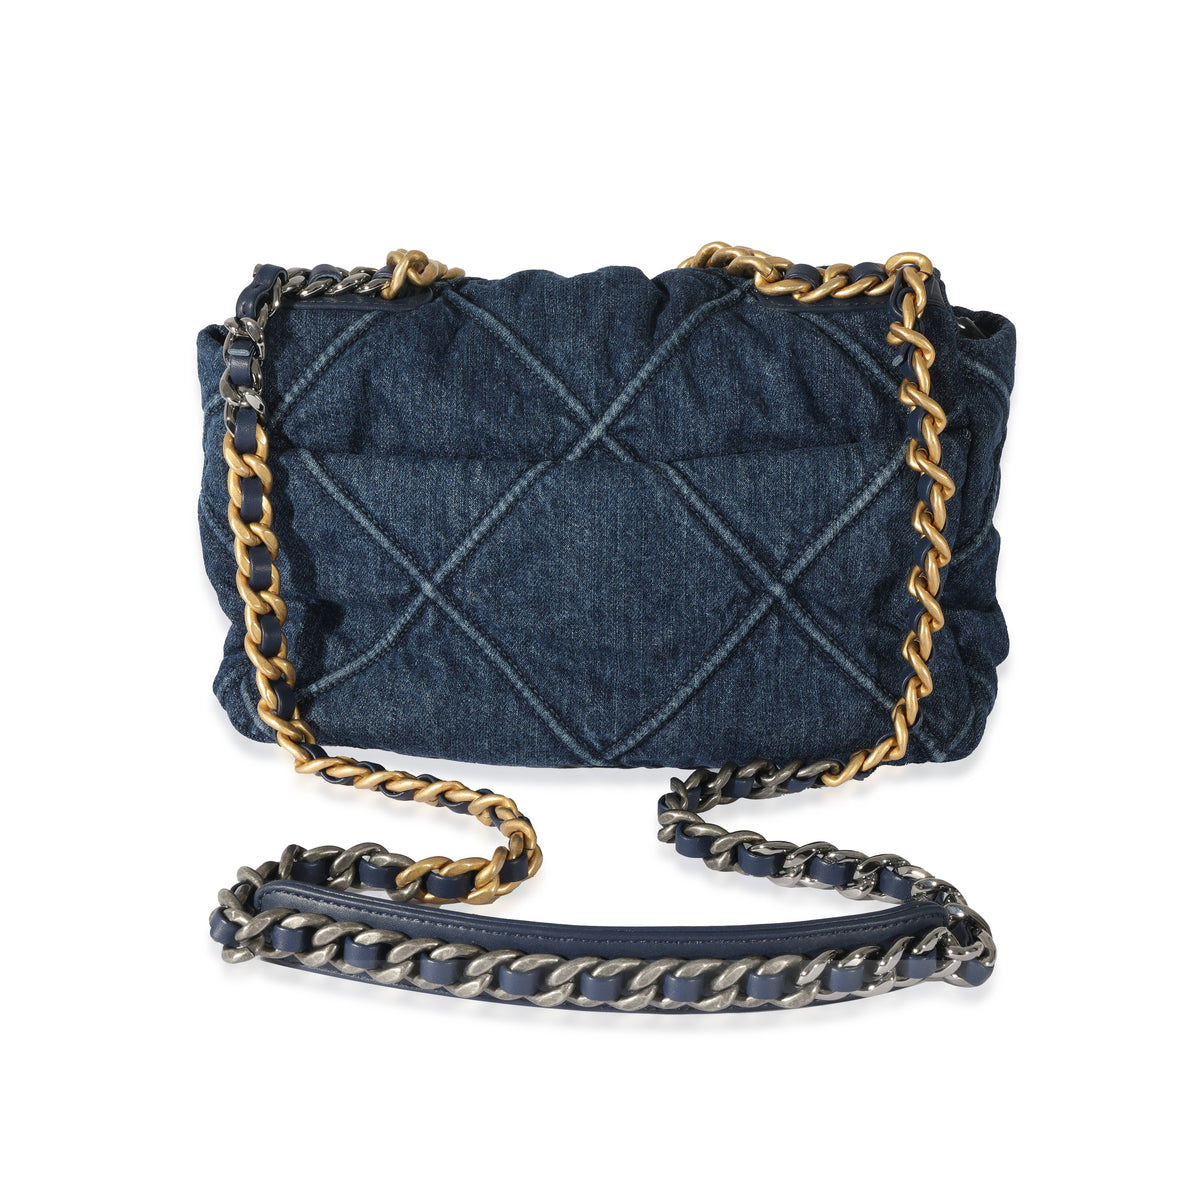 Chanel Blue Quilted Denim Medium Chanel 19 Flap Bag